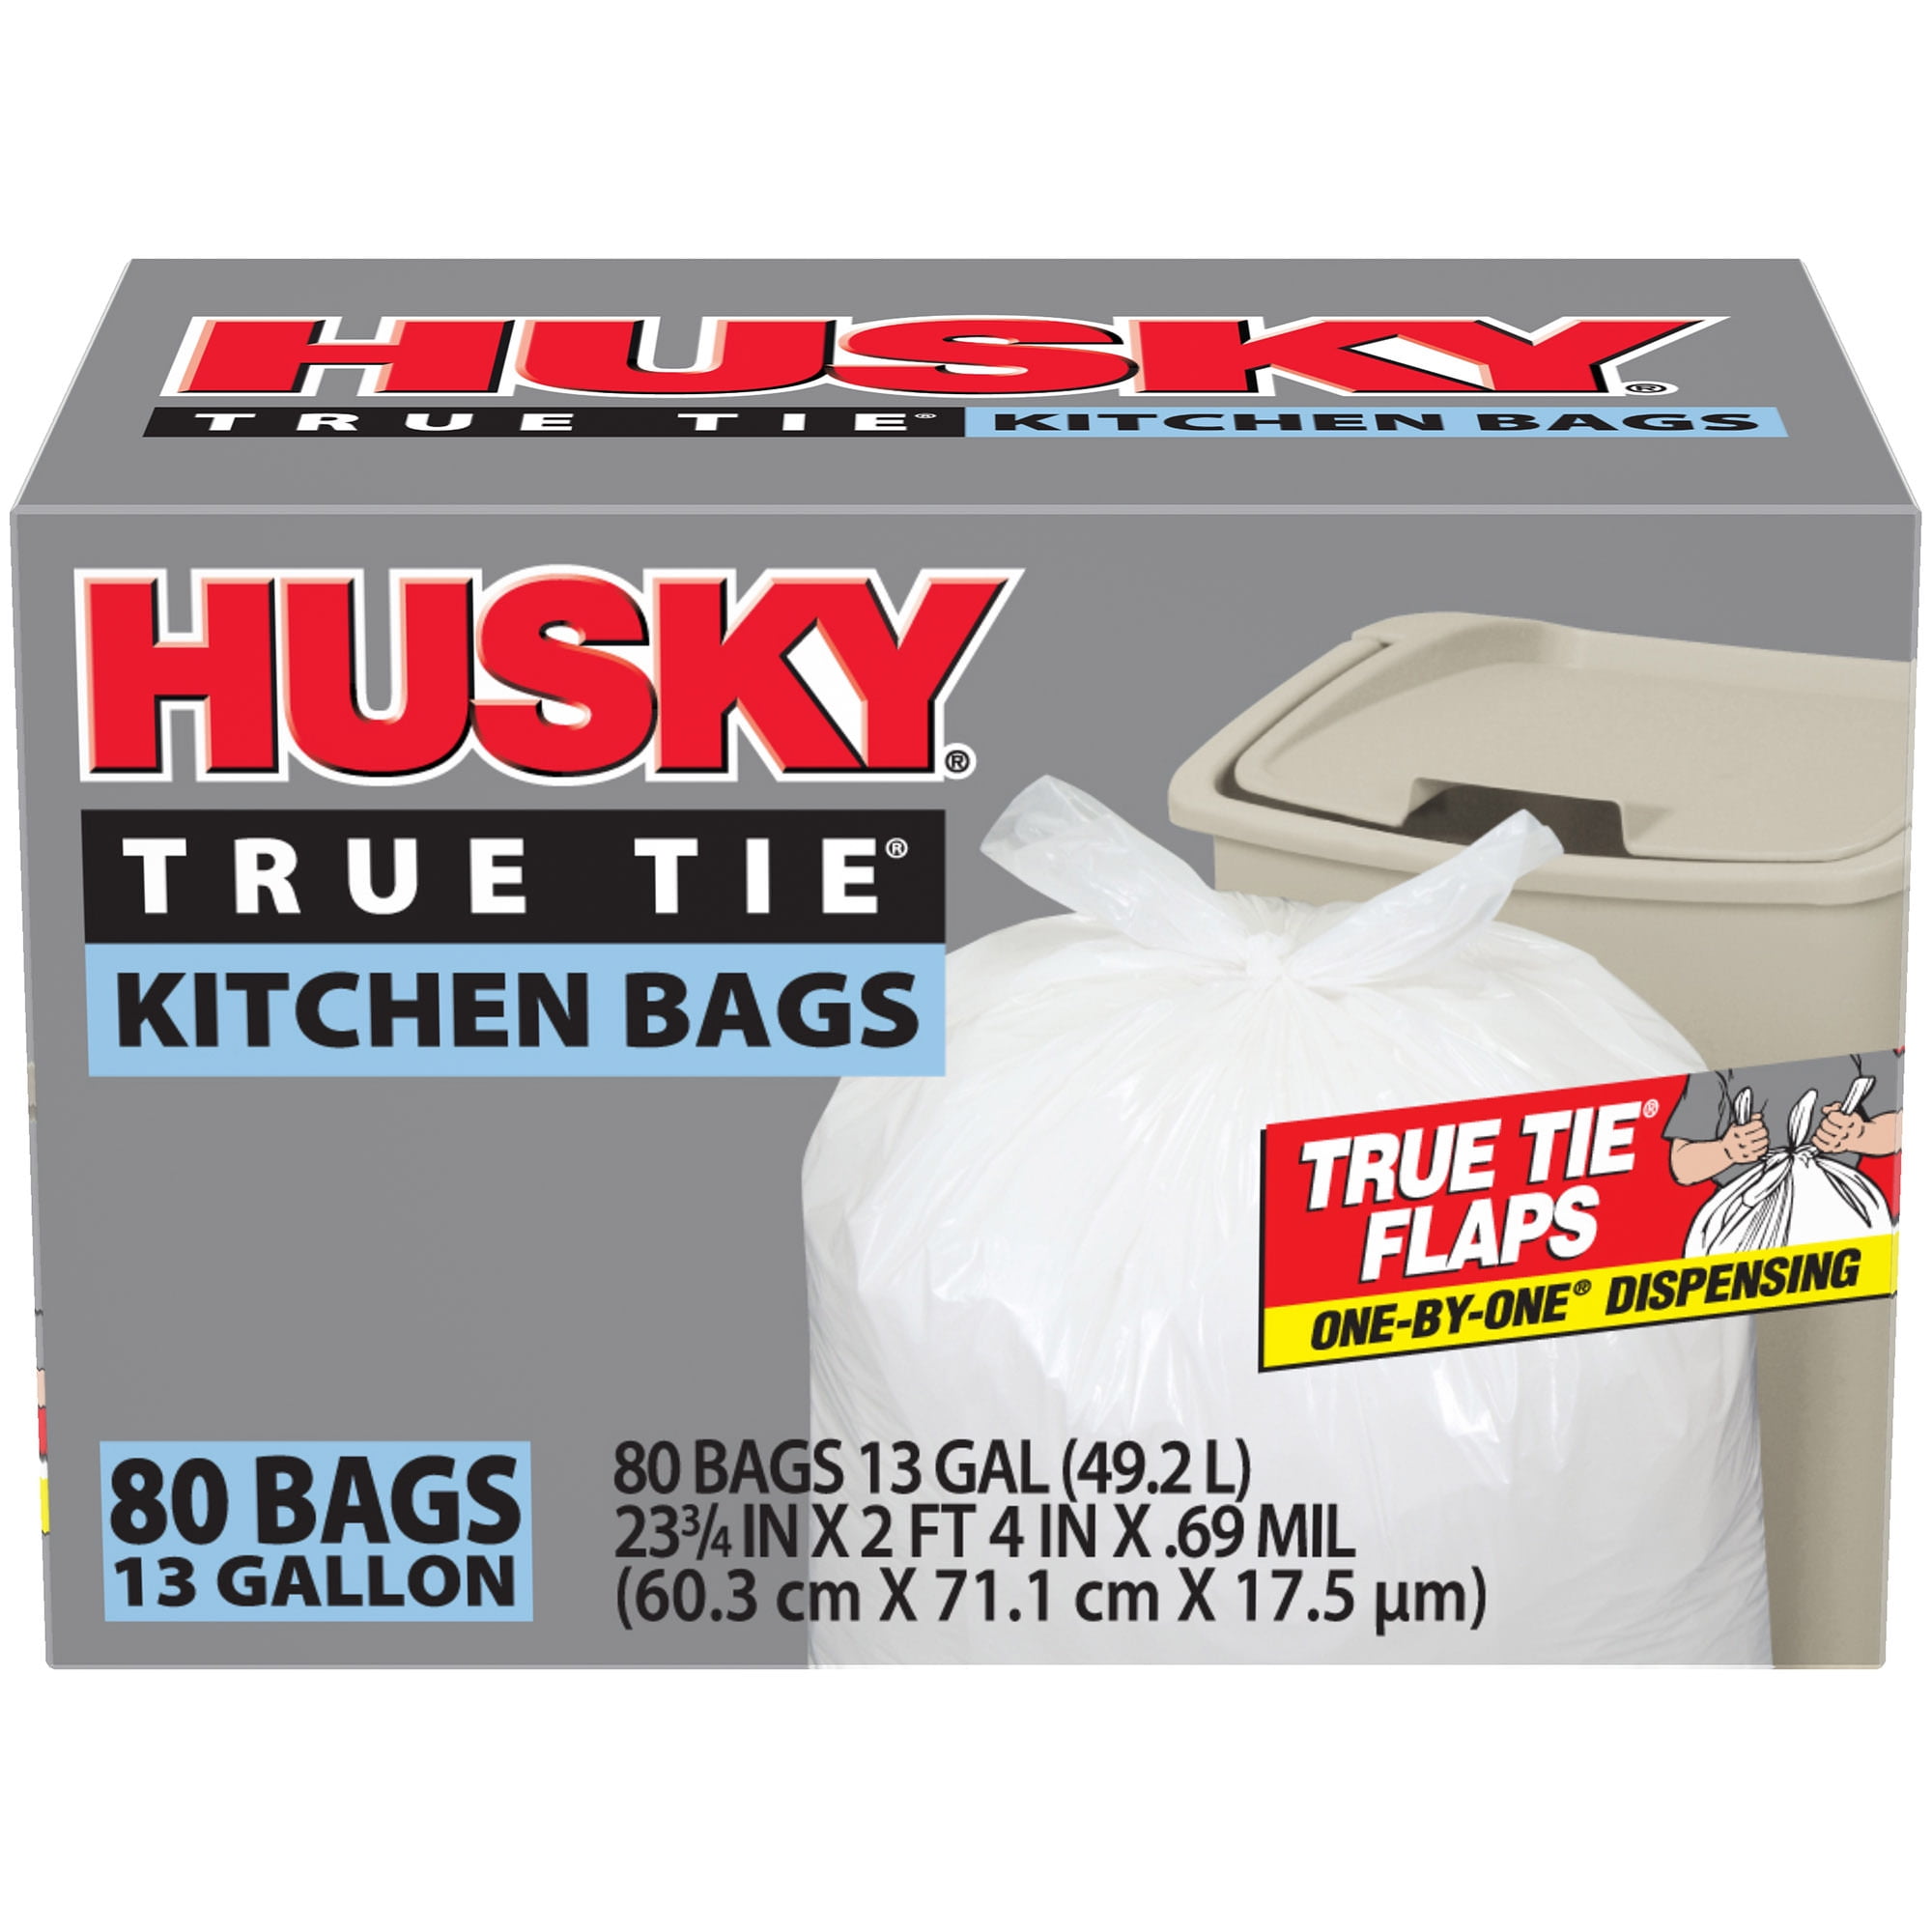 Husky Tall Kitchen White Trash Bags, 13 Gallon, 120 Bags (Expandable  Drawstring, 10% PCR) 